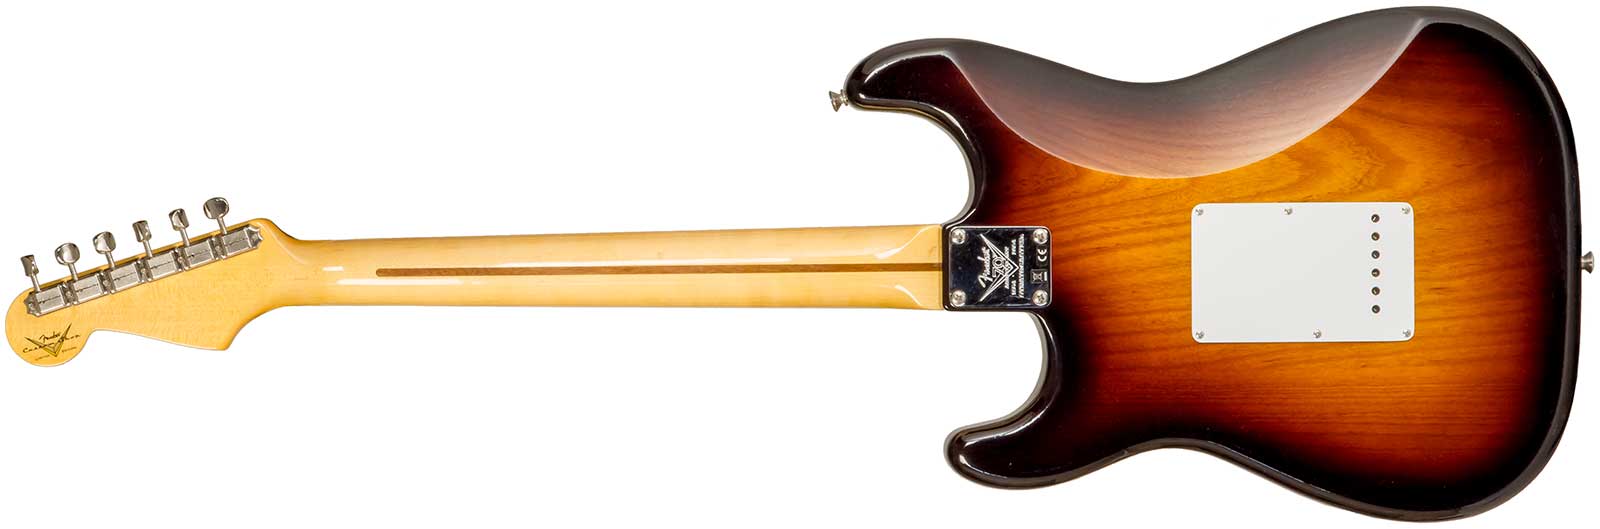 Fender Custom Shop Strat 1954 70th Anniv. 3s Trem Mn #xn4356 - Closet Classic Wide Fade 2-color Sunburst - Str shape electric guitar - Variation 1